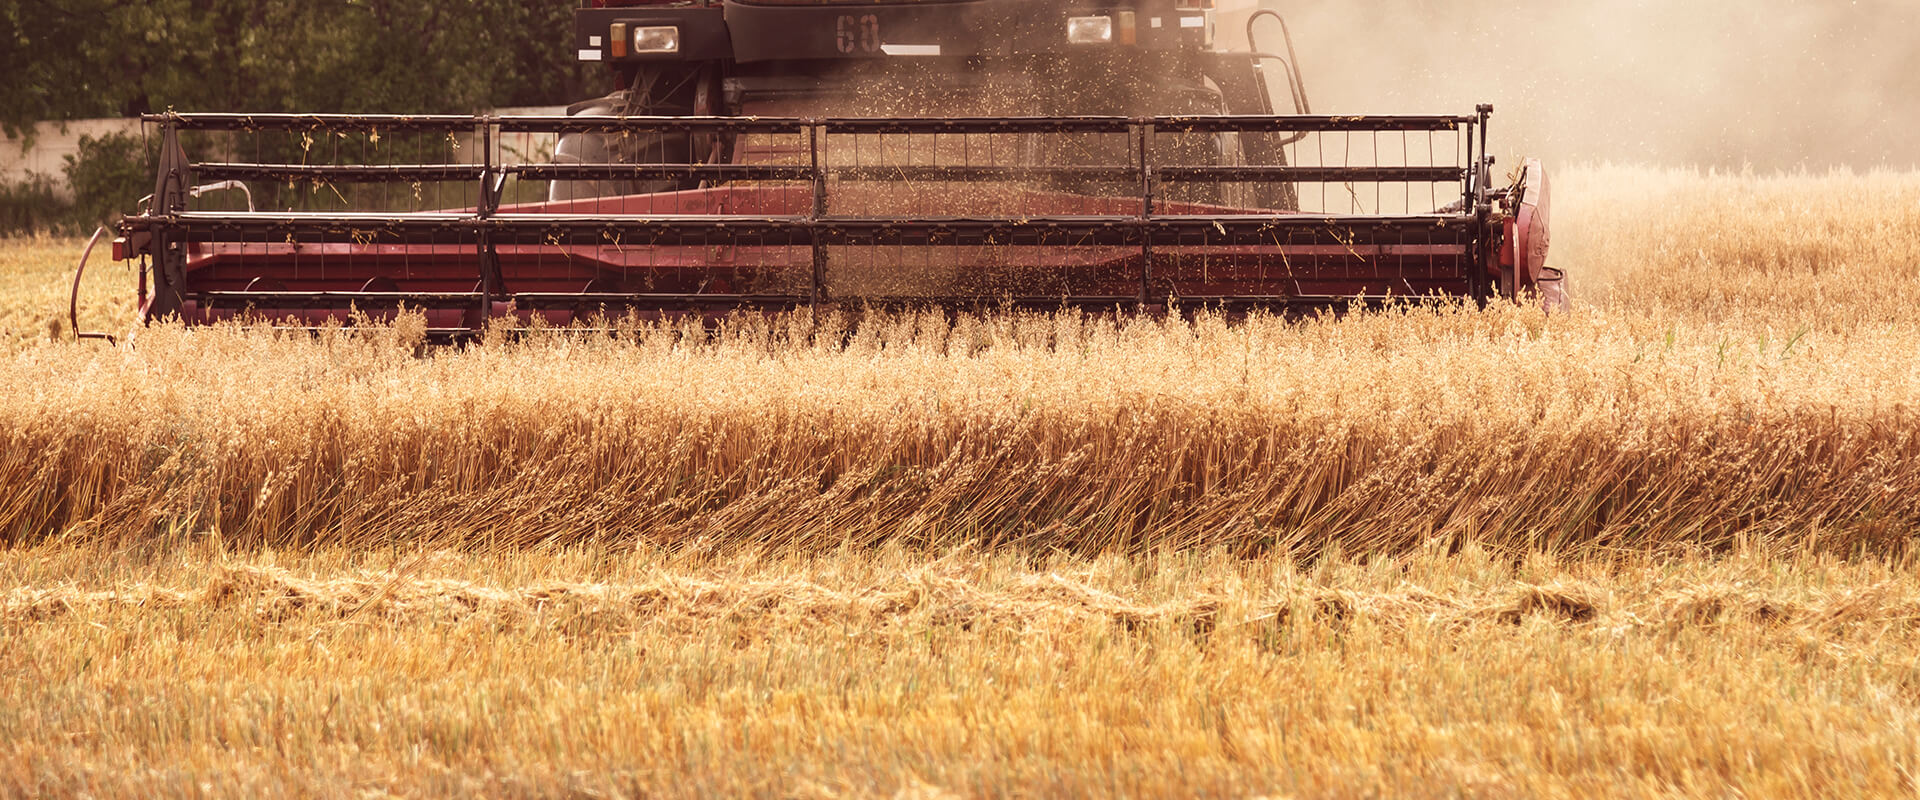 Grain head harvesting a field of wheat